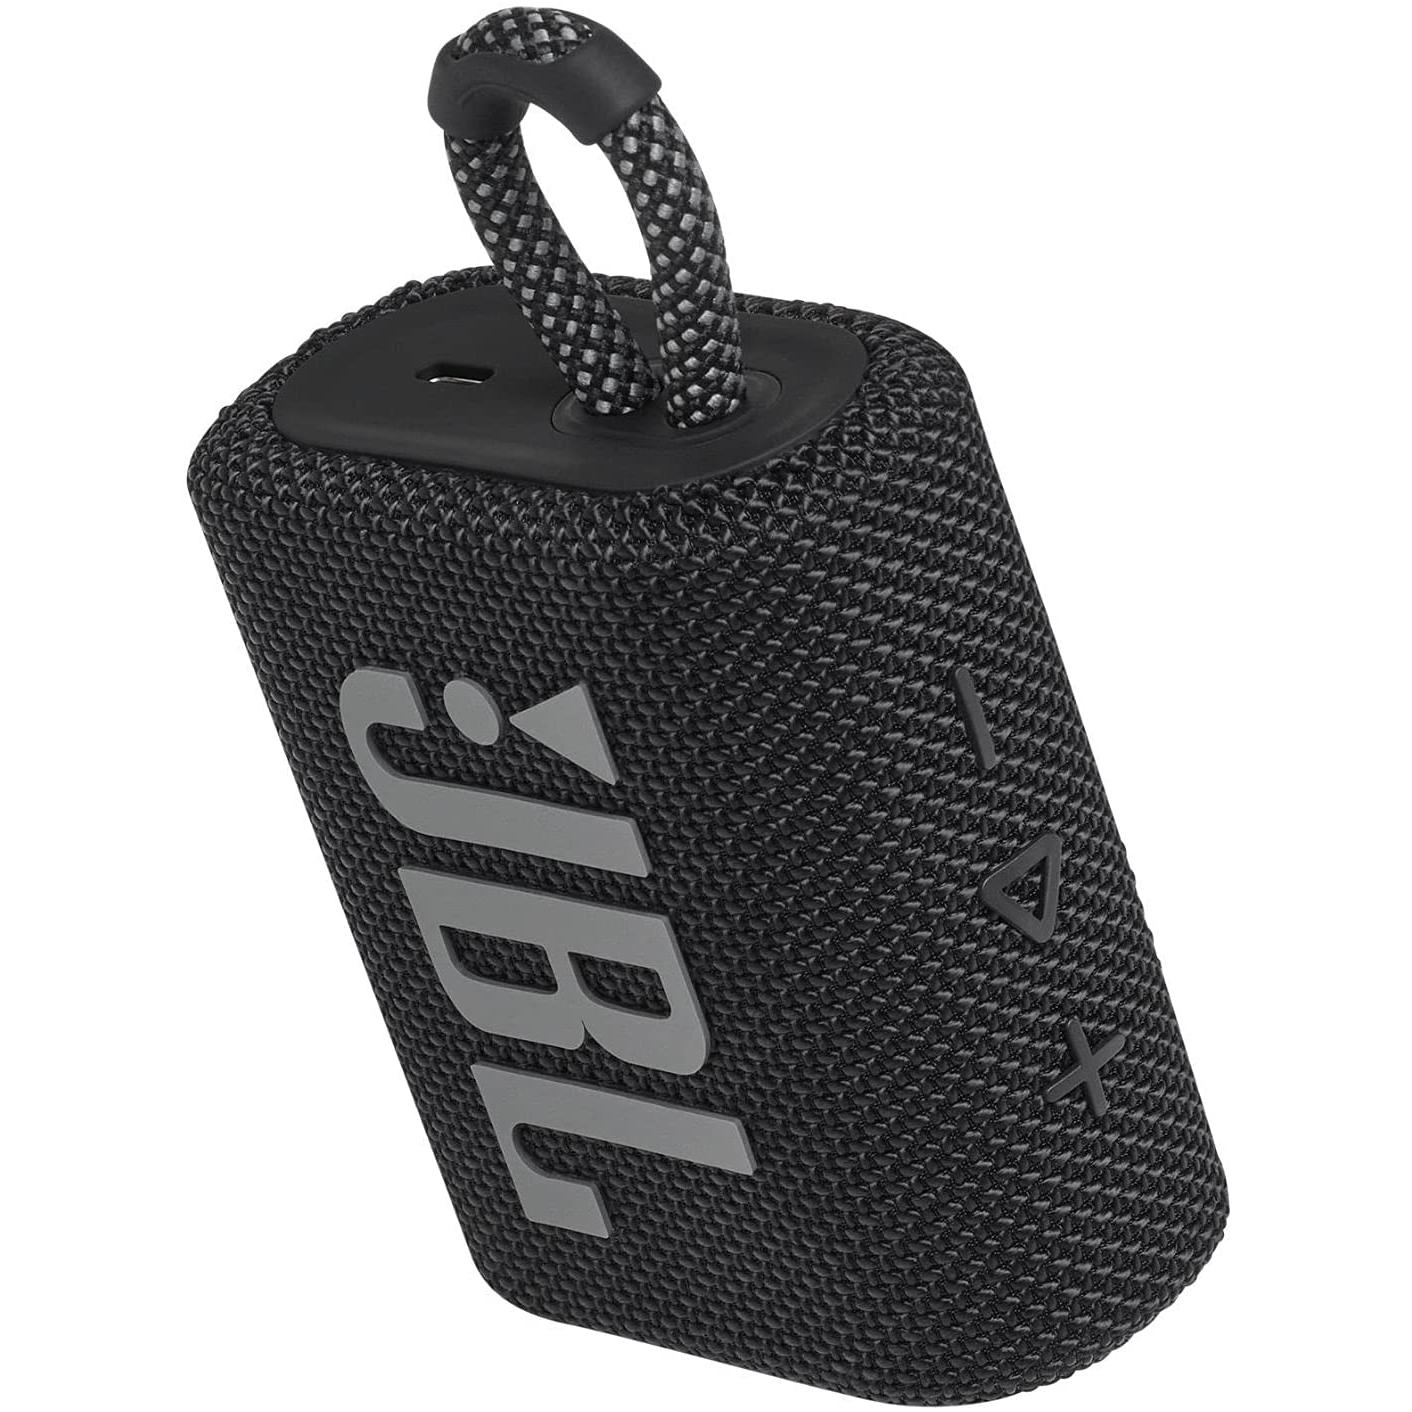 JBL GO 3 Portable Waterproof Bluetooth Speaker